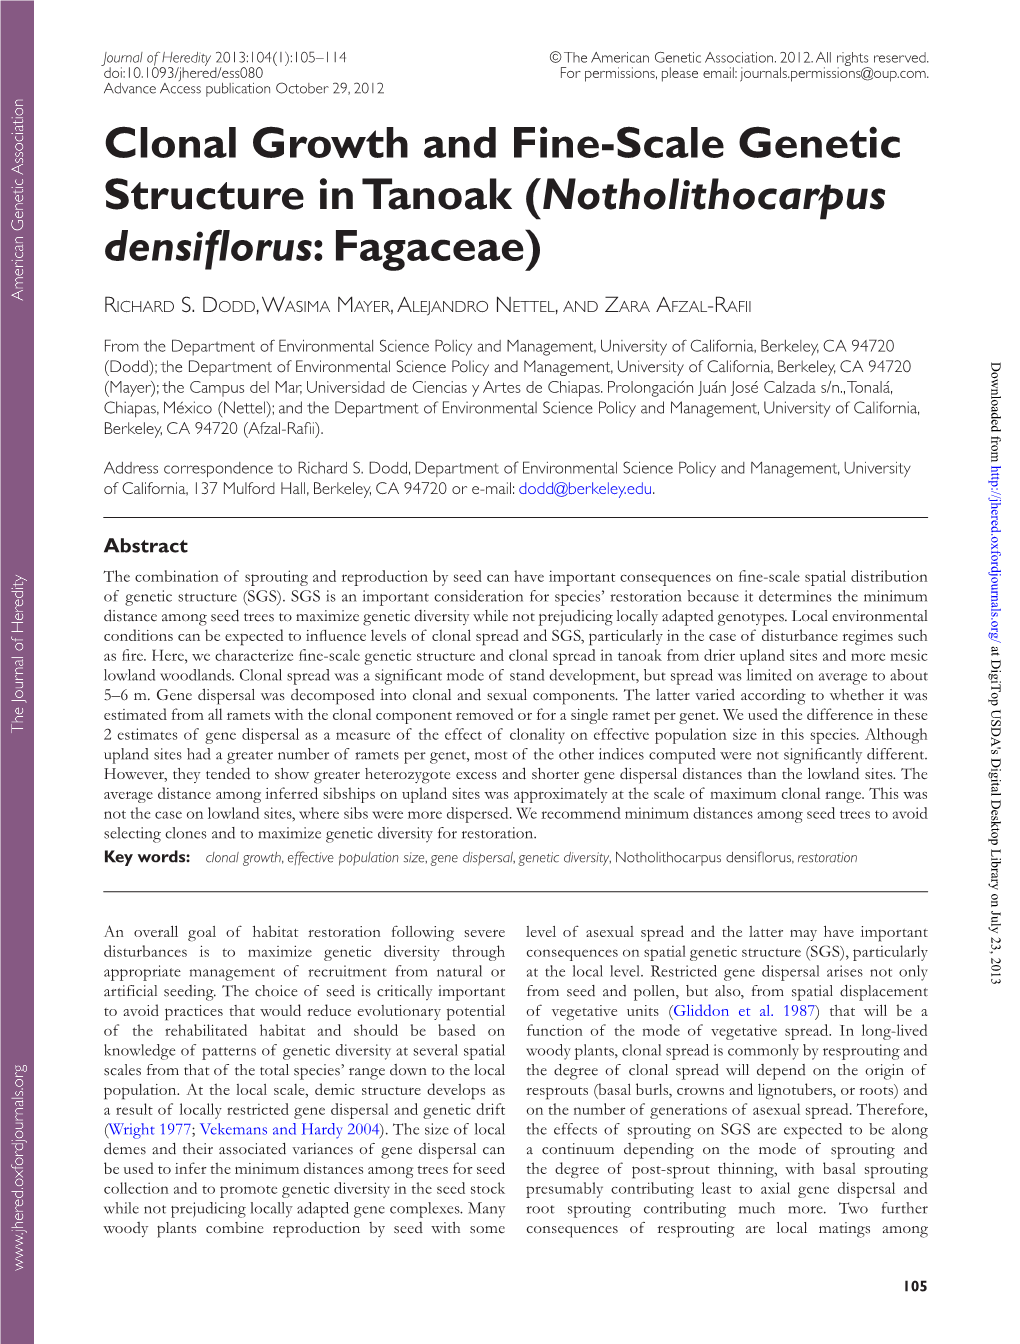 Clonal Growth and Fine-Scale Genetic Structure in Tanoak (Notholithocarpus Densiflorus: Fagaceae)